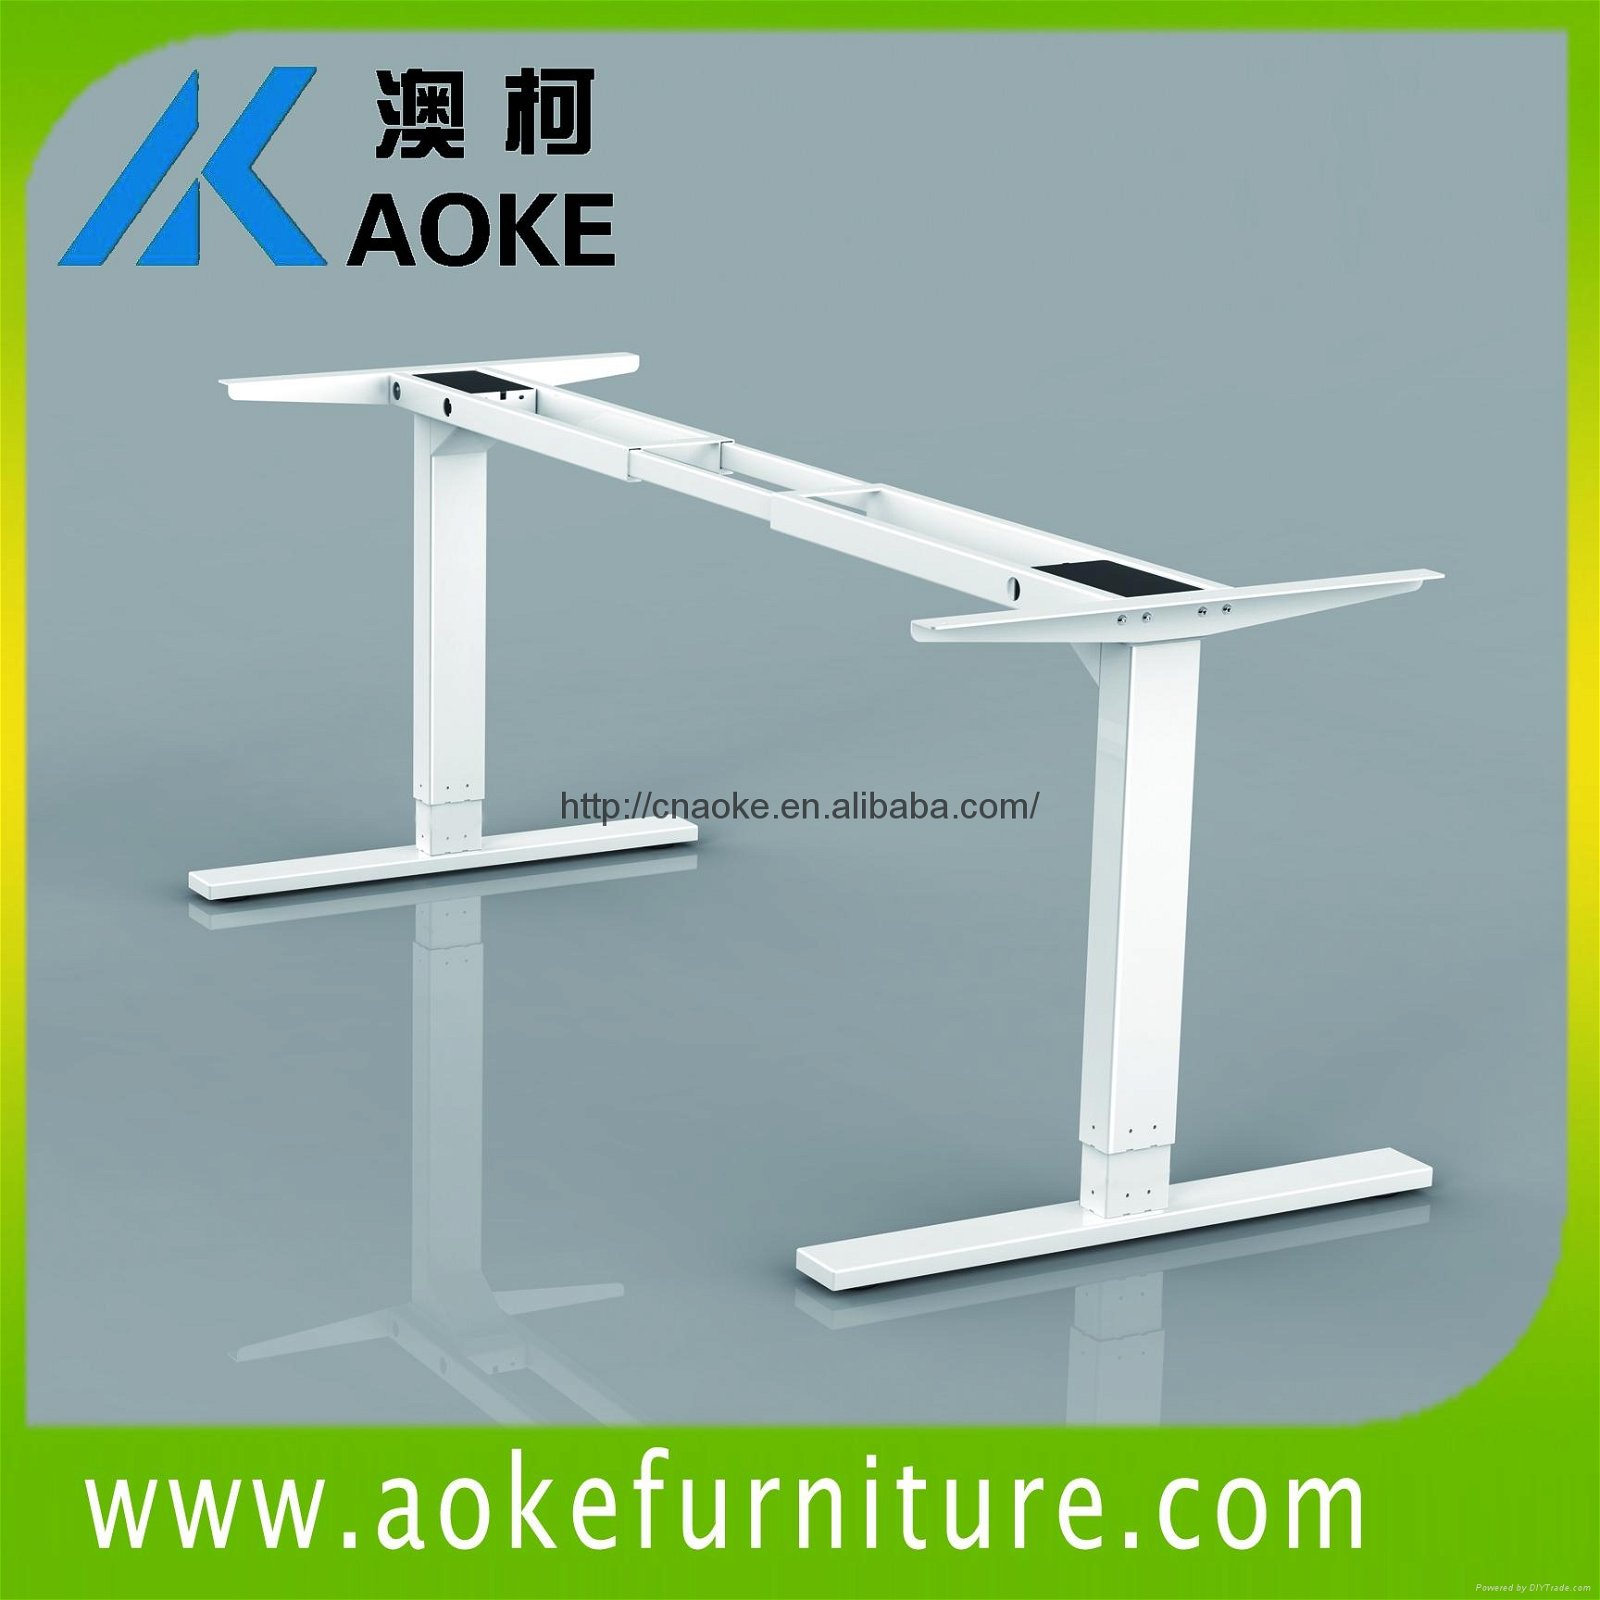 AOKE AK2RT-RS2 electric adjustable standing desk